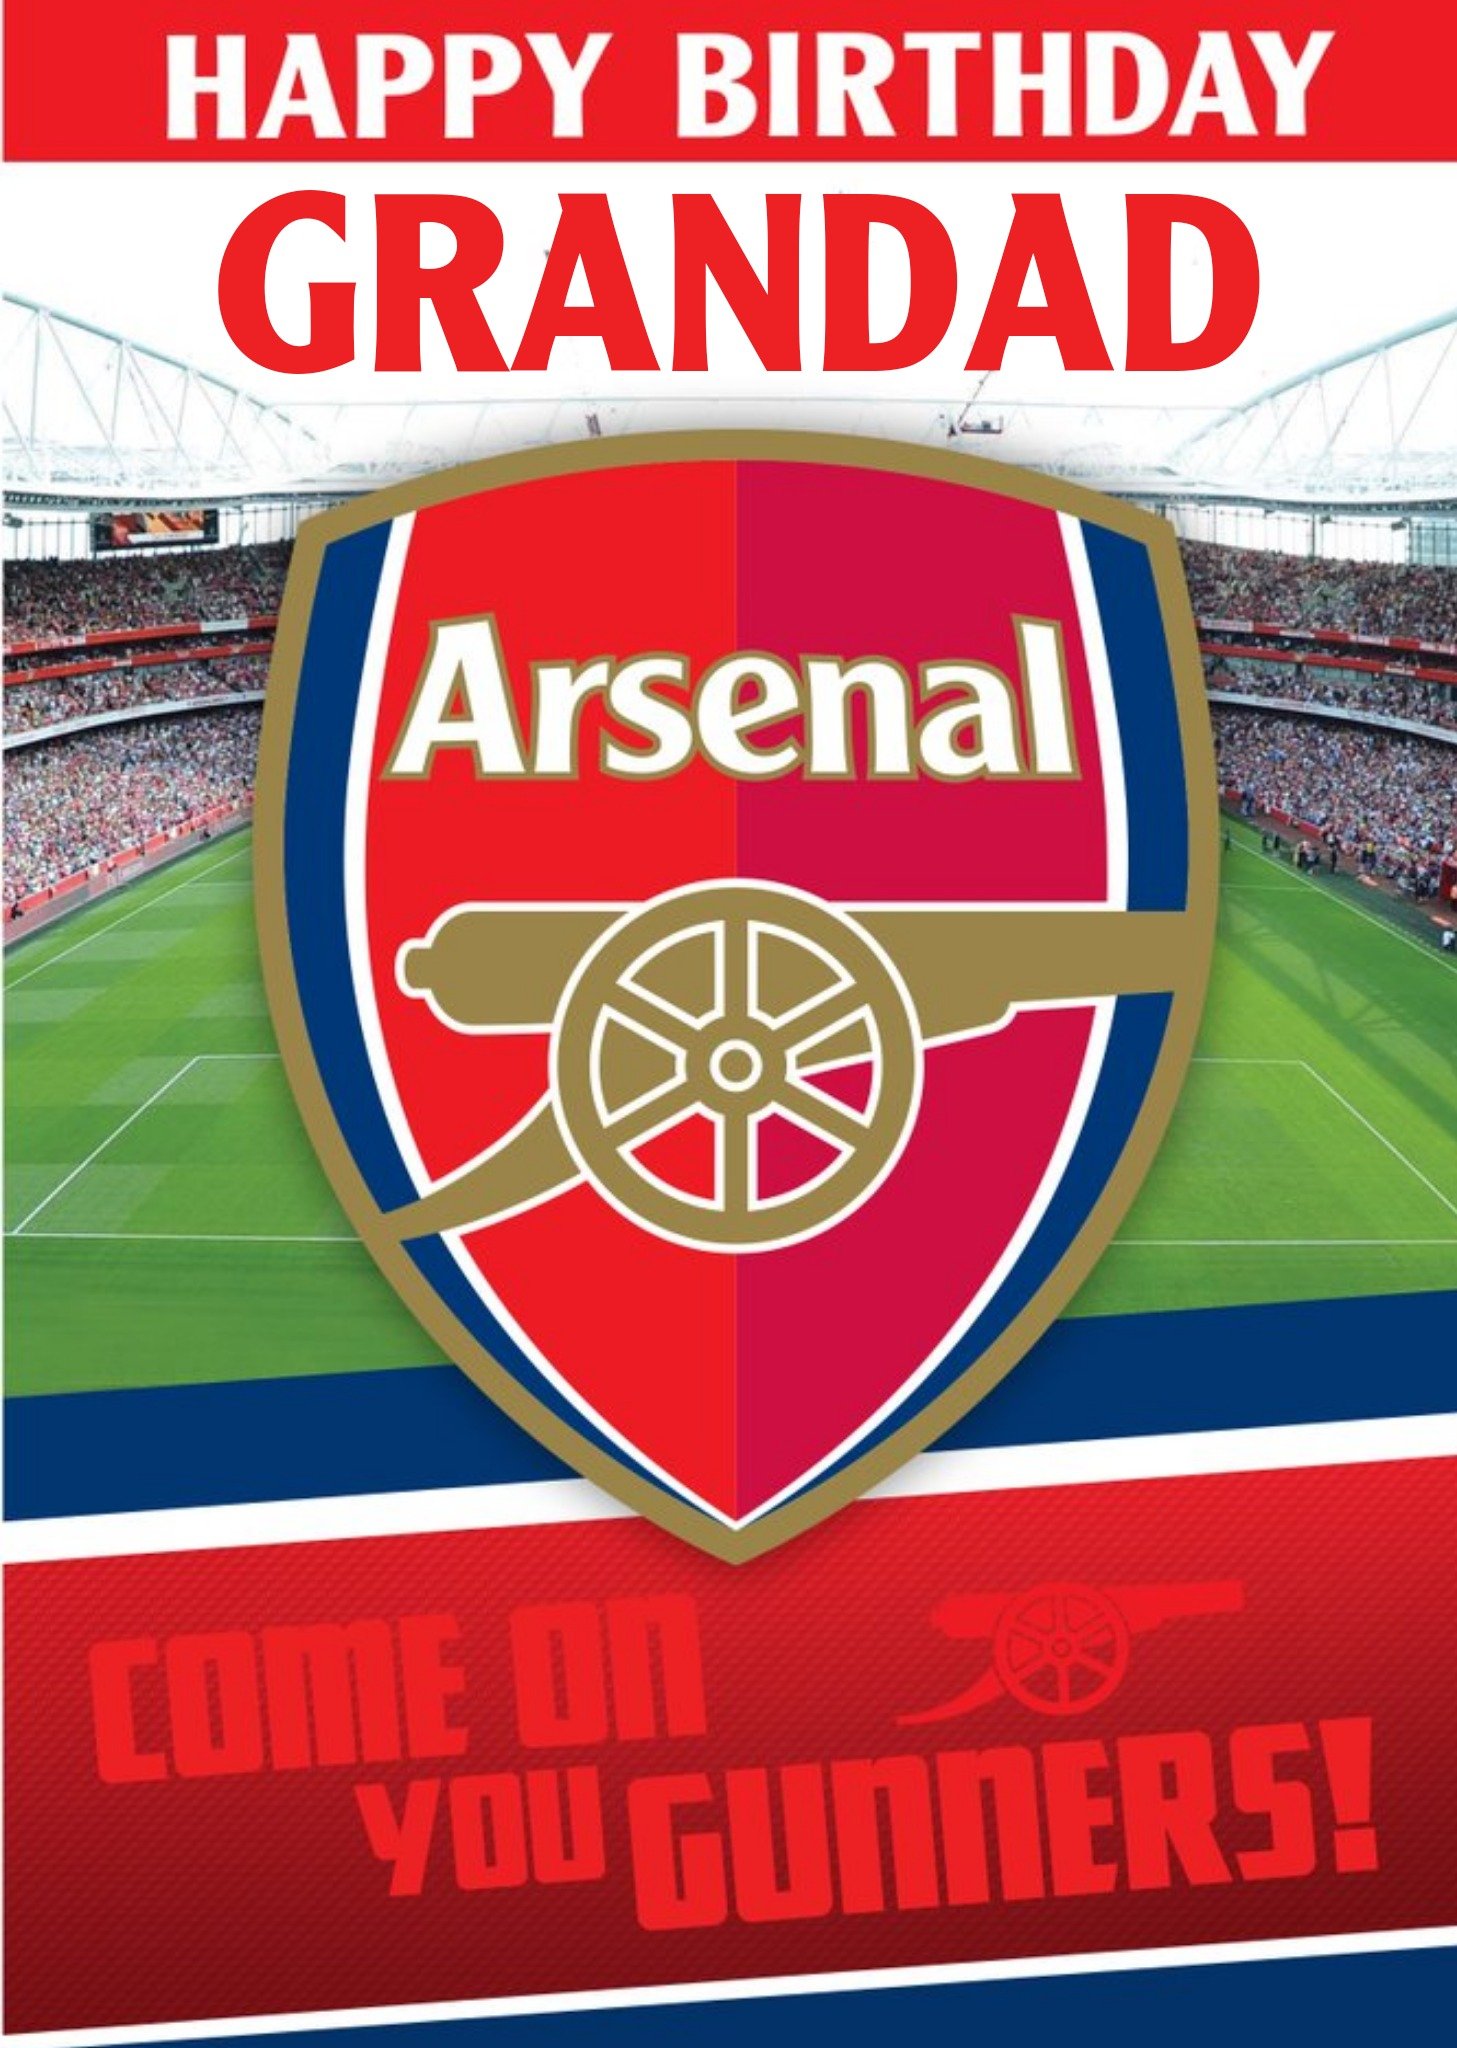 Arsenal Fc Birthday Card - Grandad - Come On You Gunners, Large